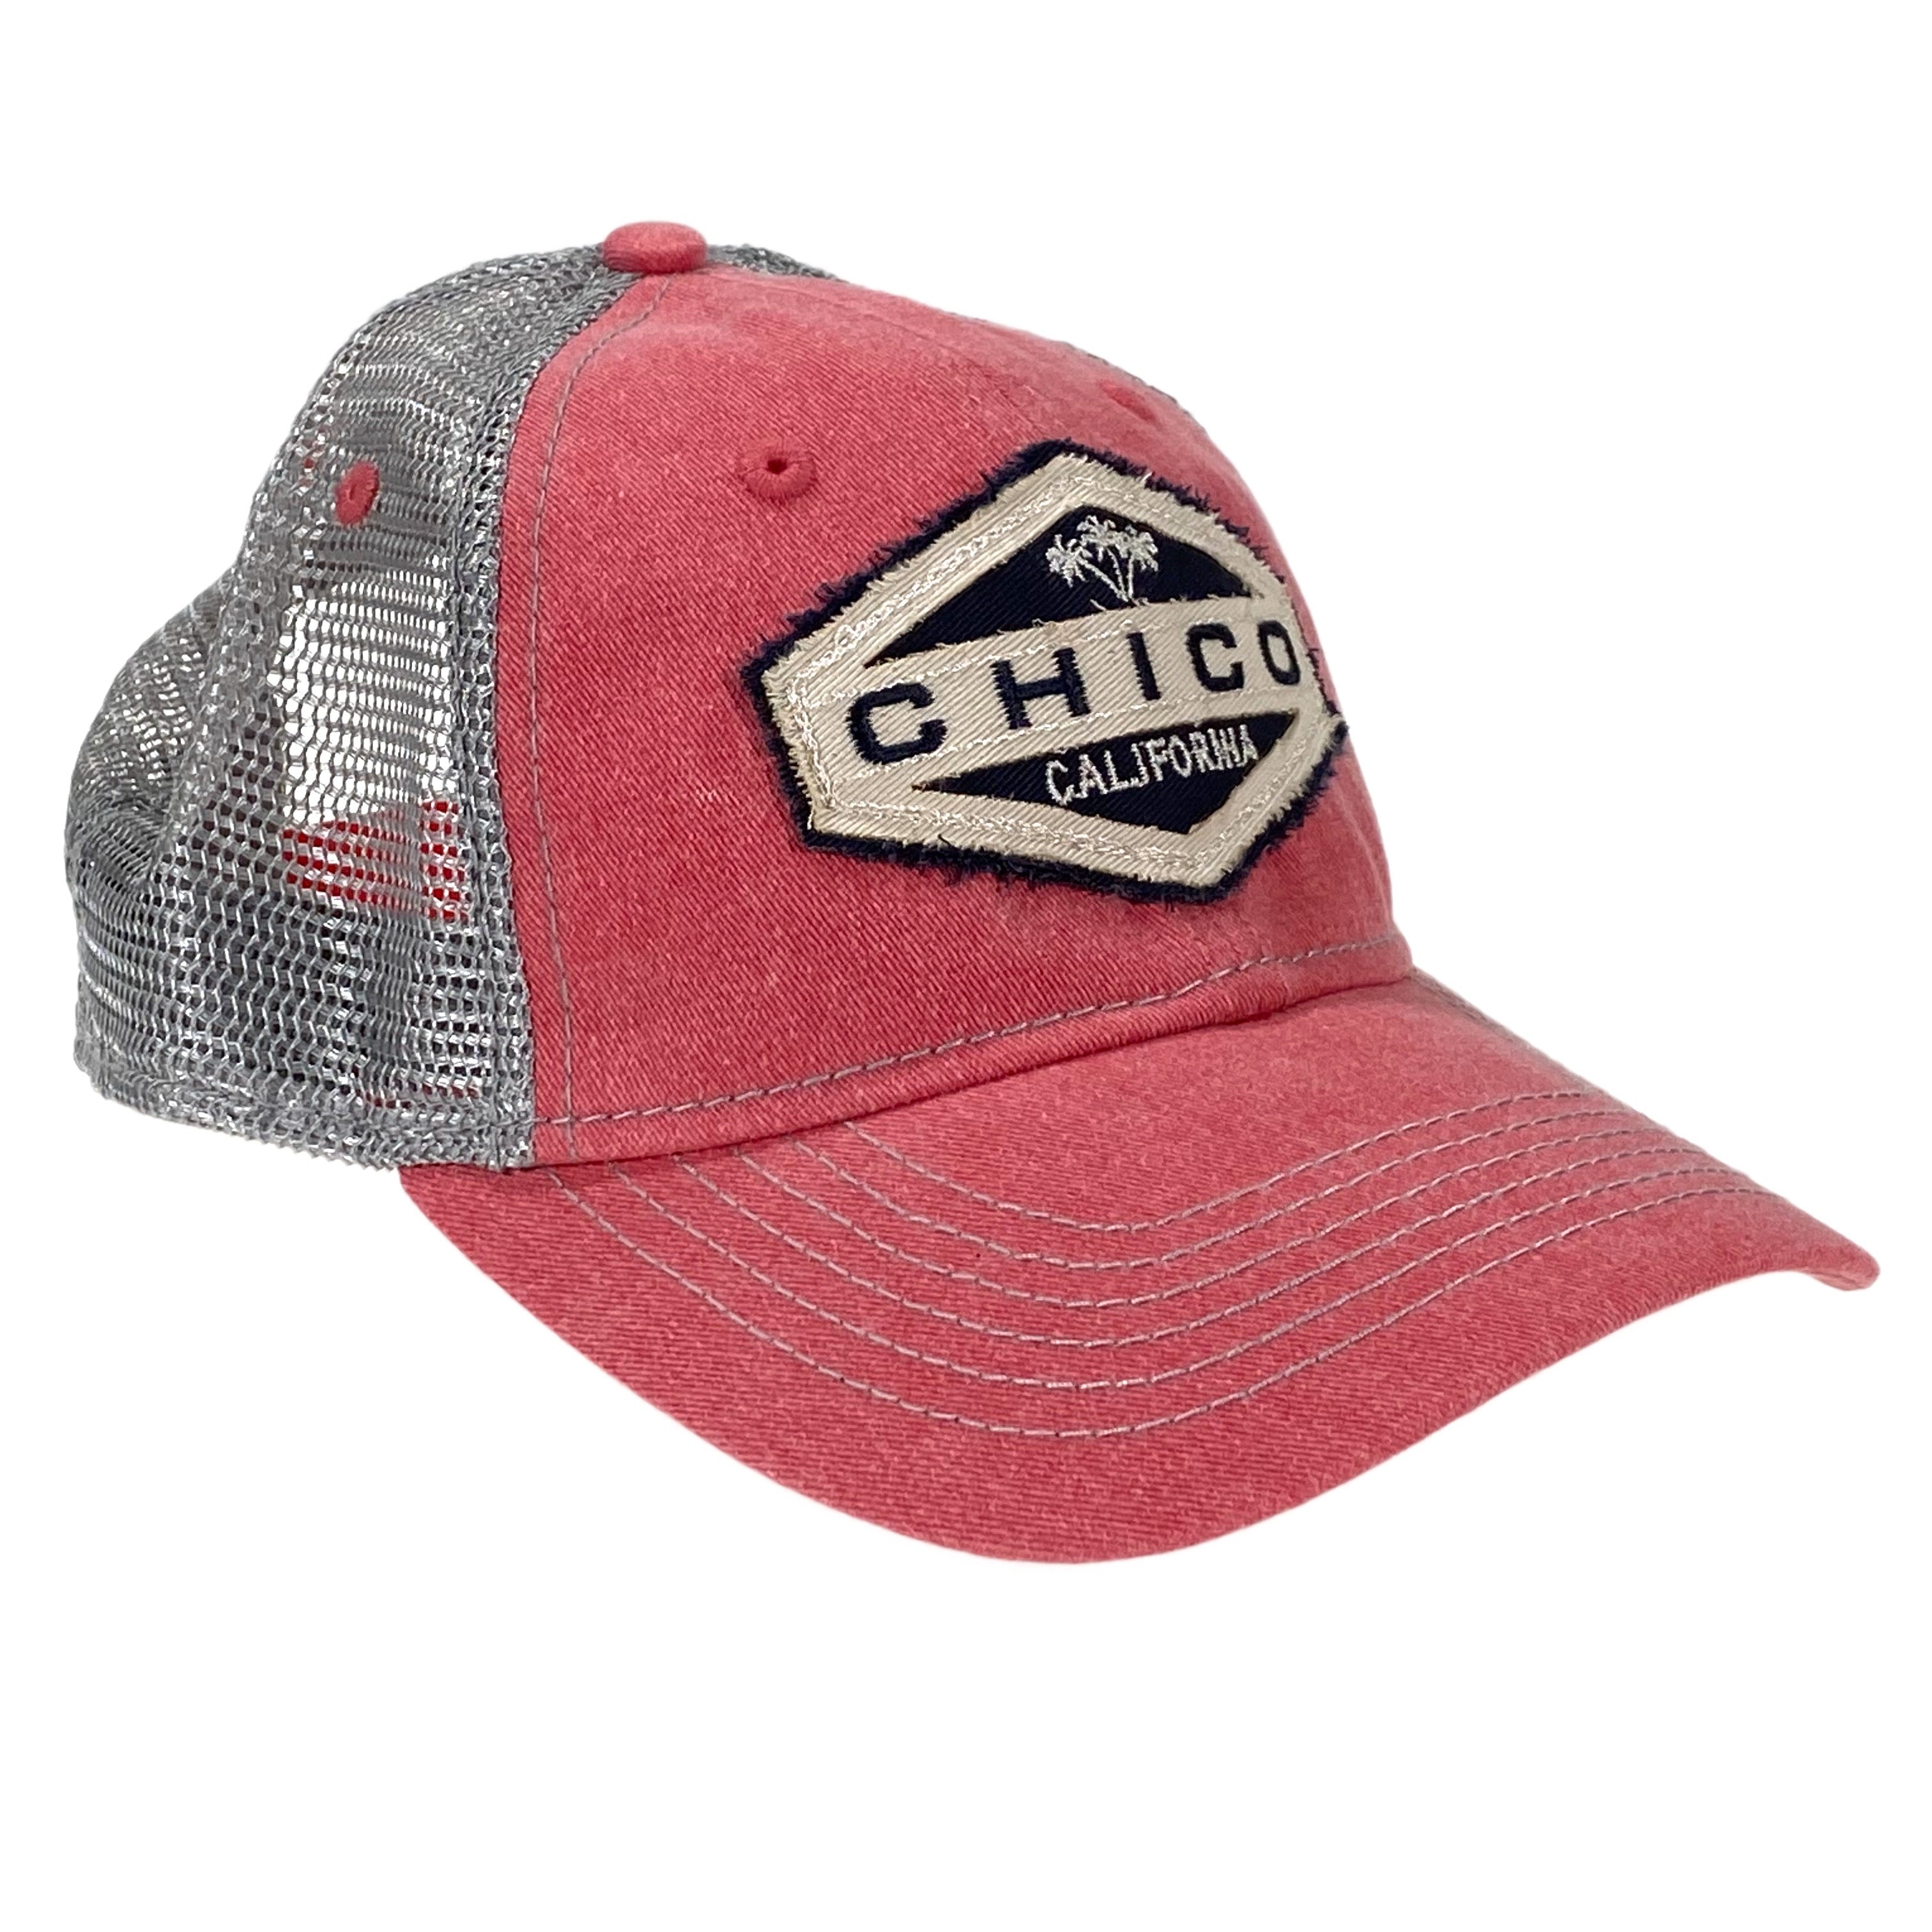 Chico Hat - Easy Street Papaya/Grey   3275181.2